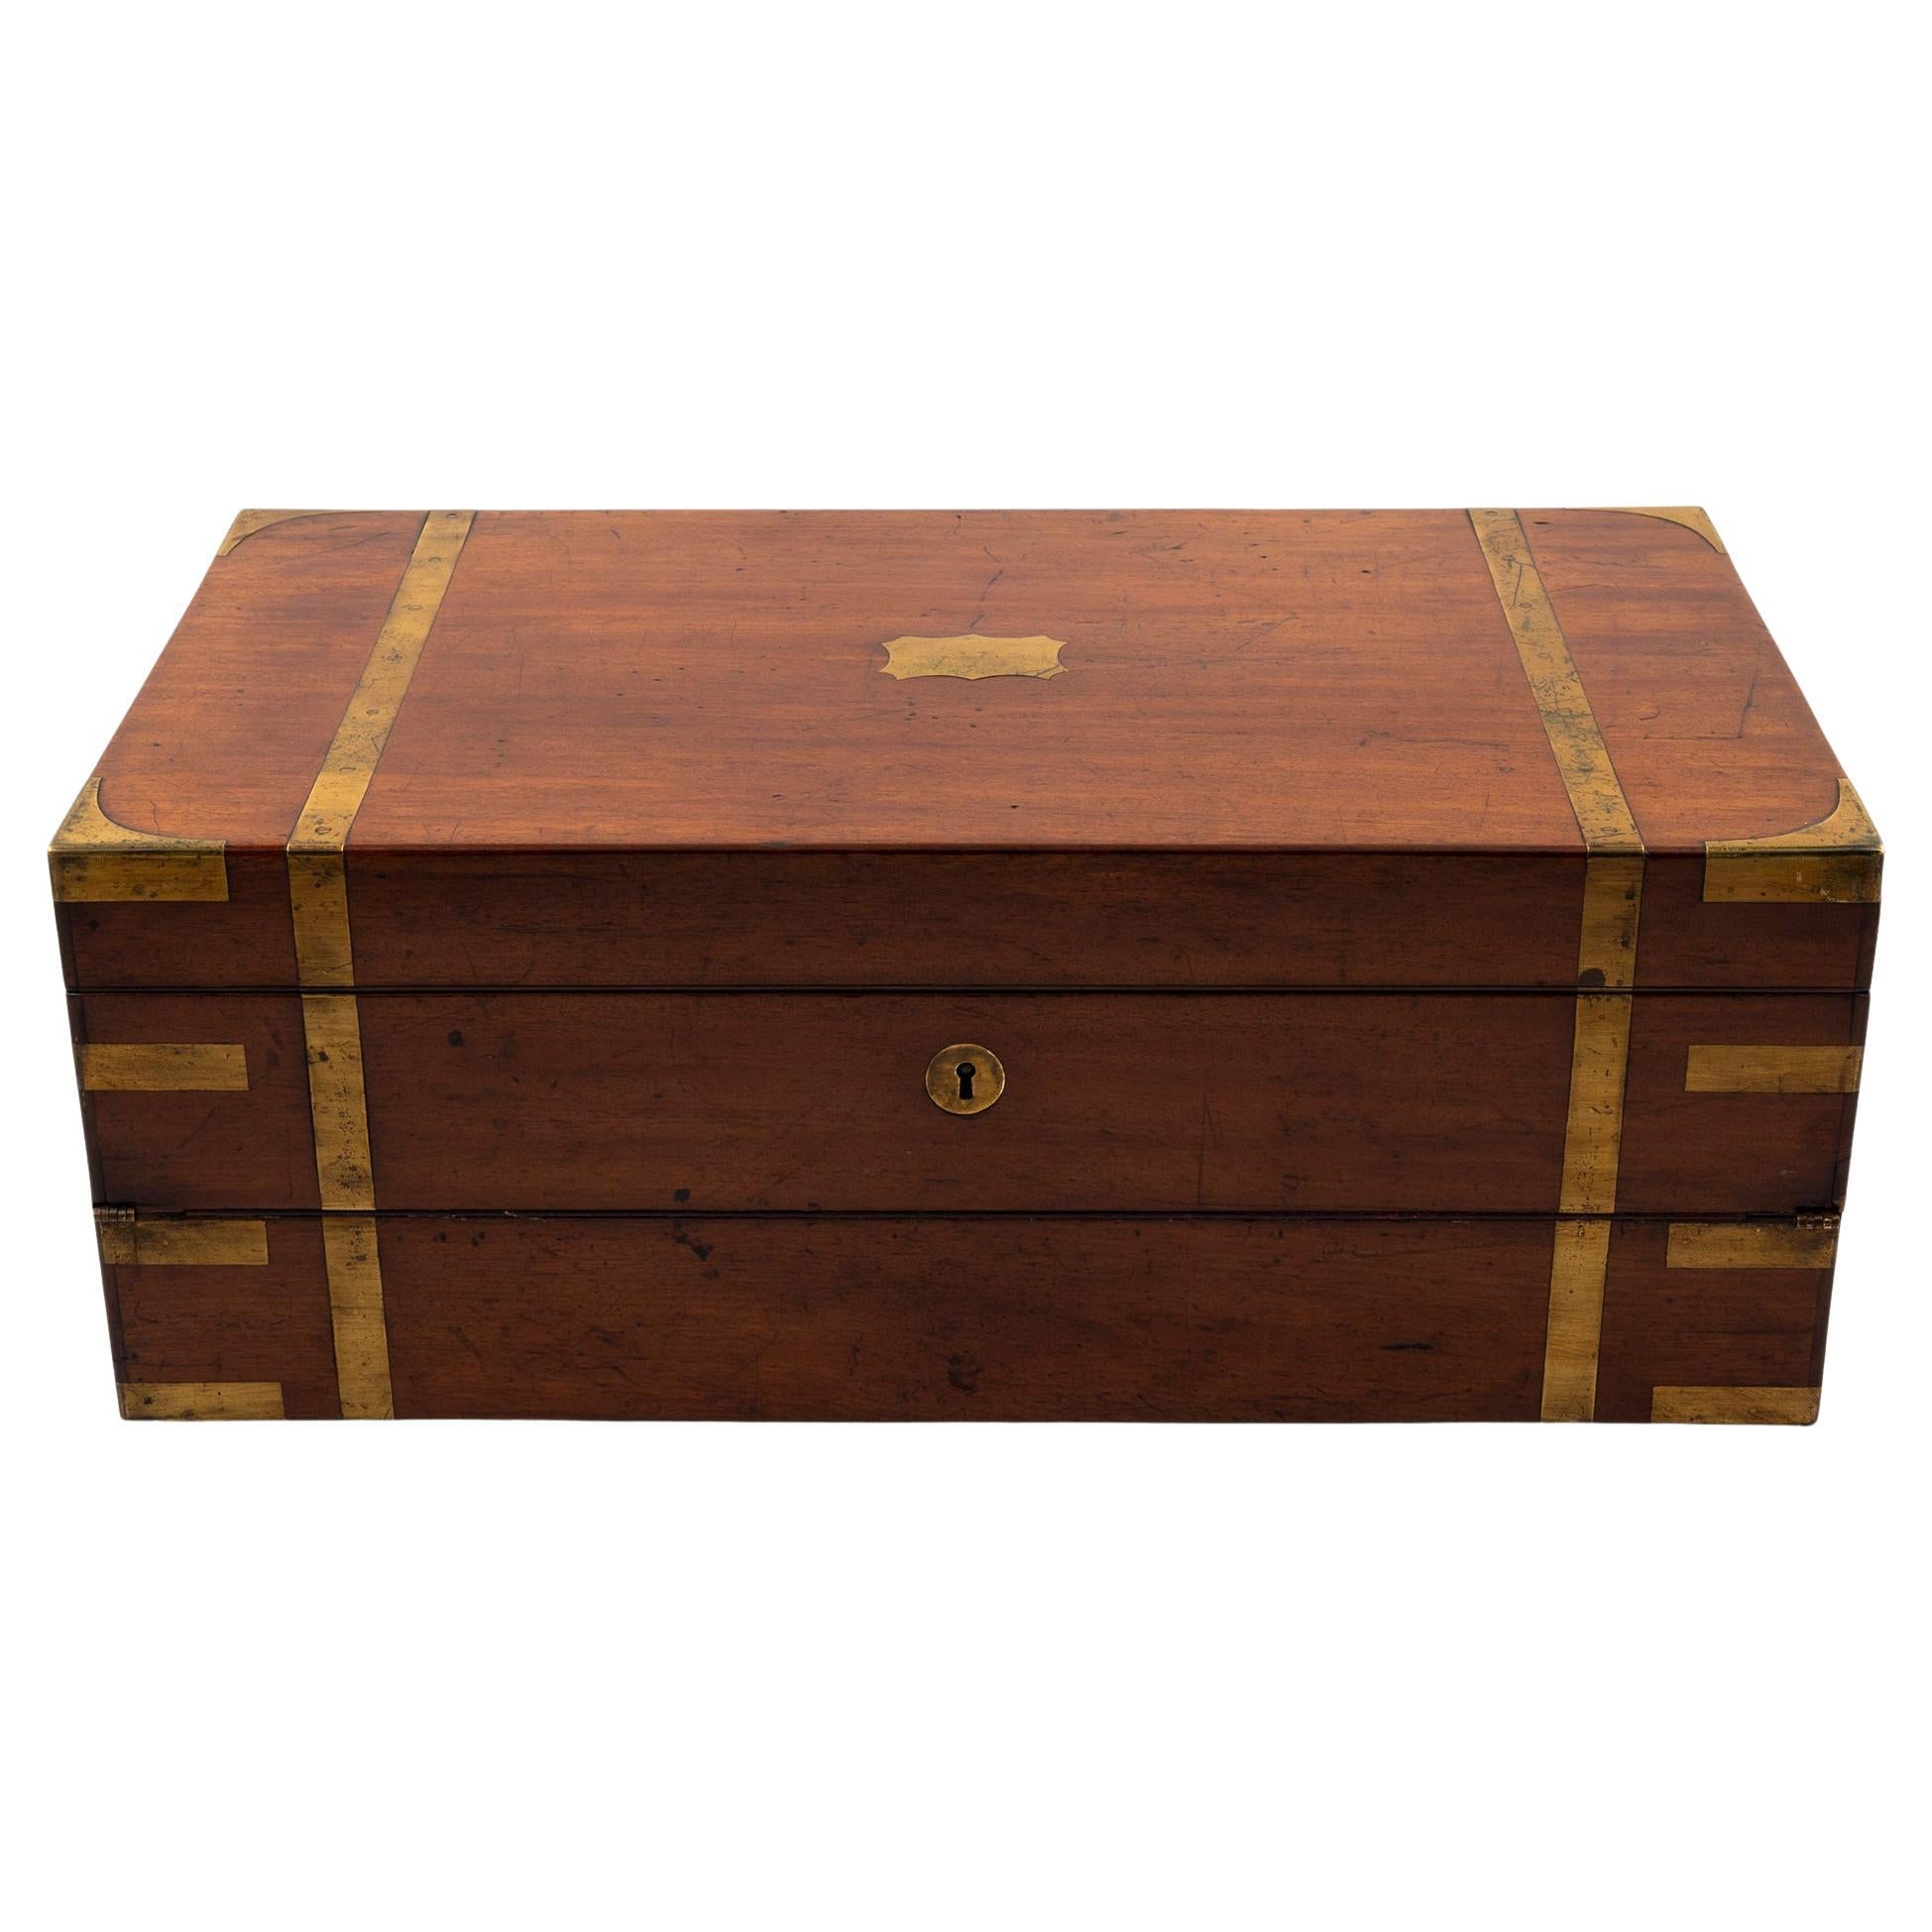 Antique Brass Strapped Mahogany Writing Box